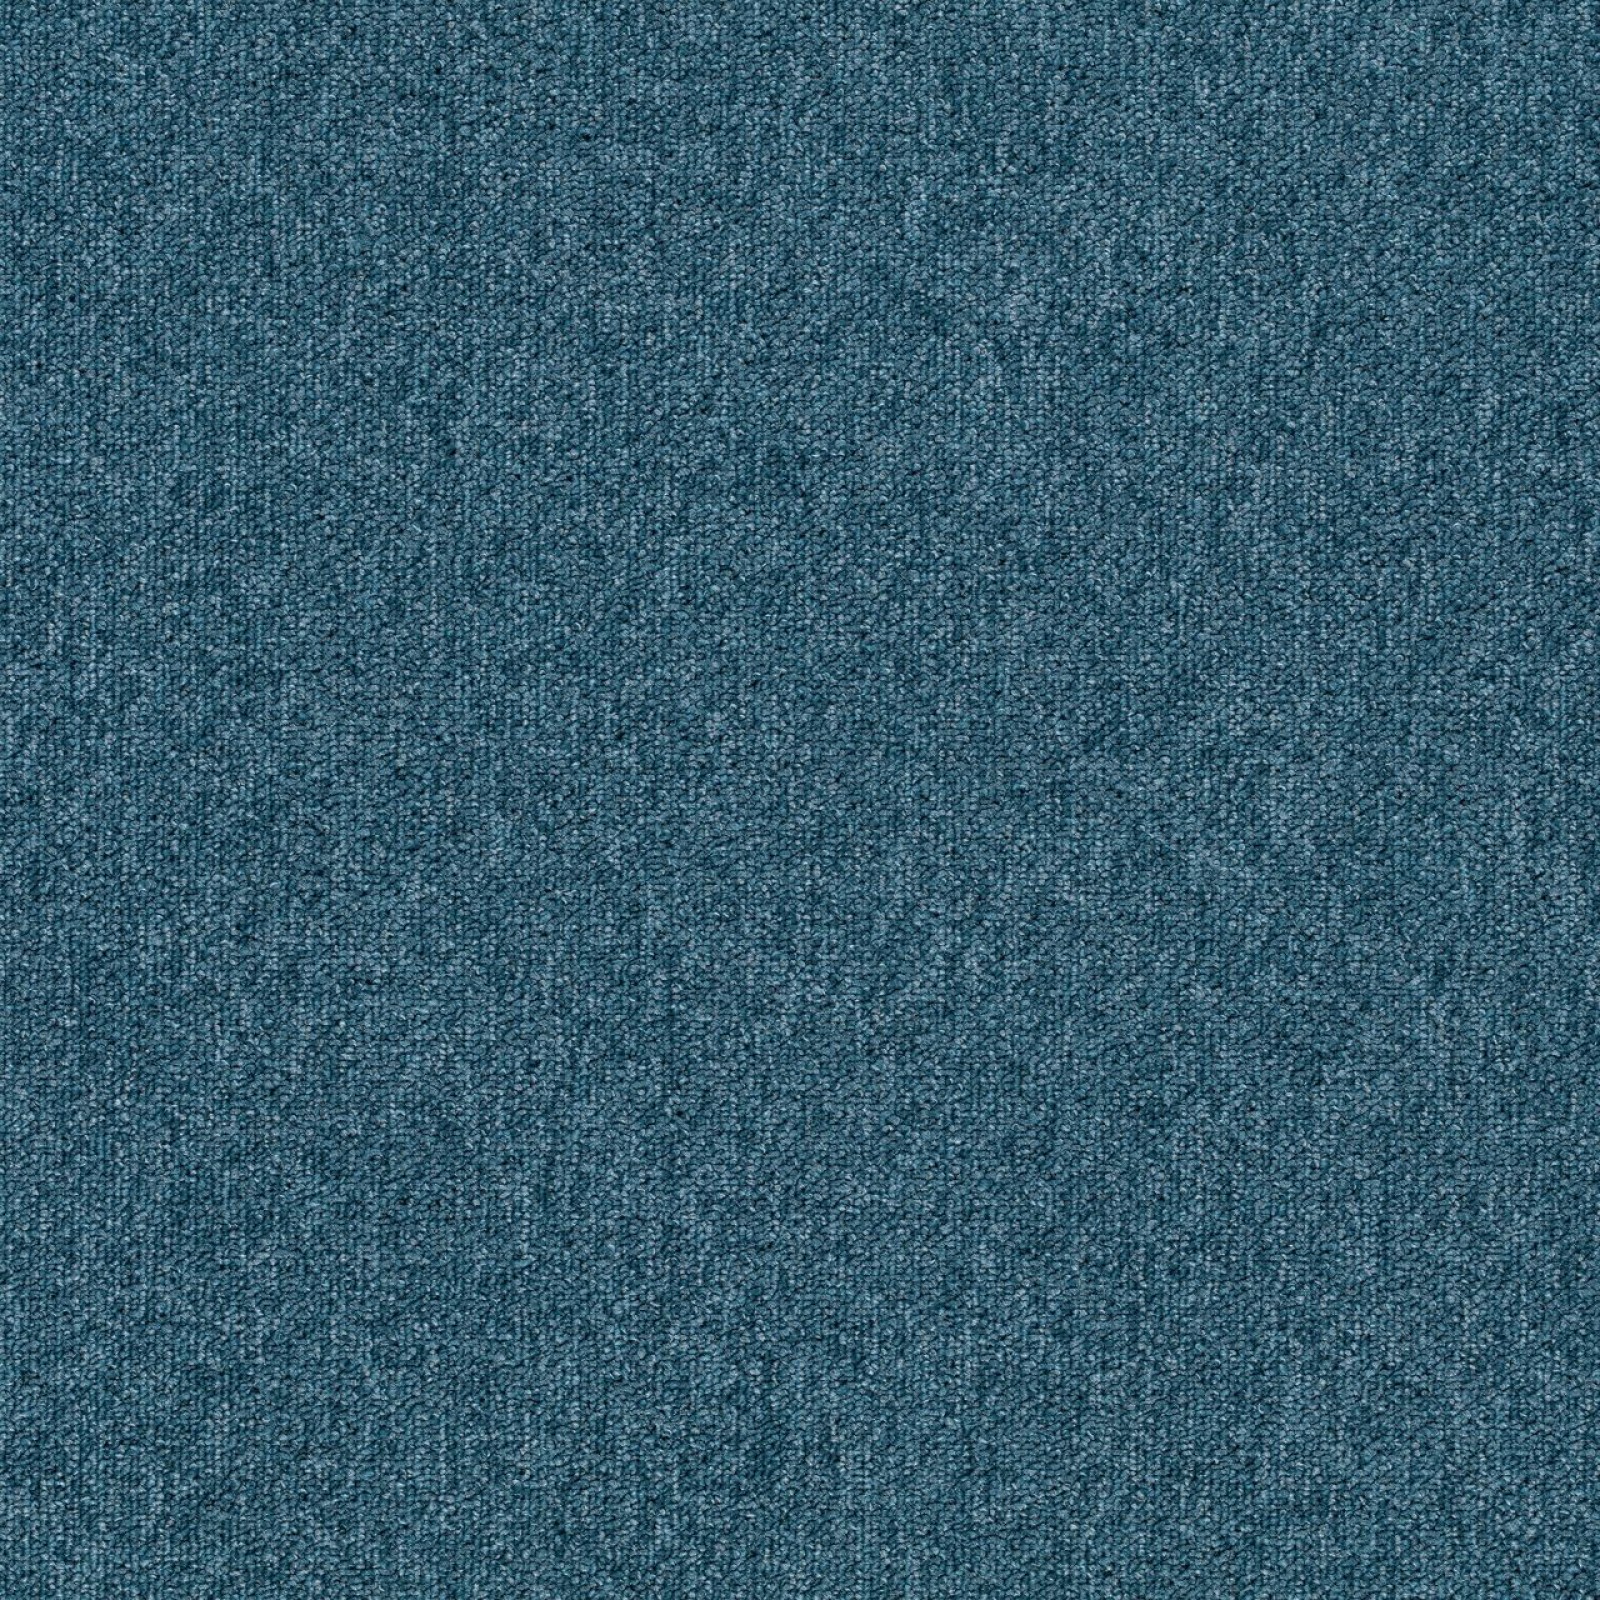 Vzor - 4356 mid blue